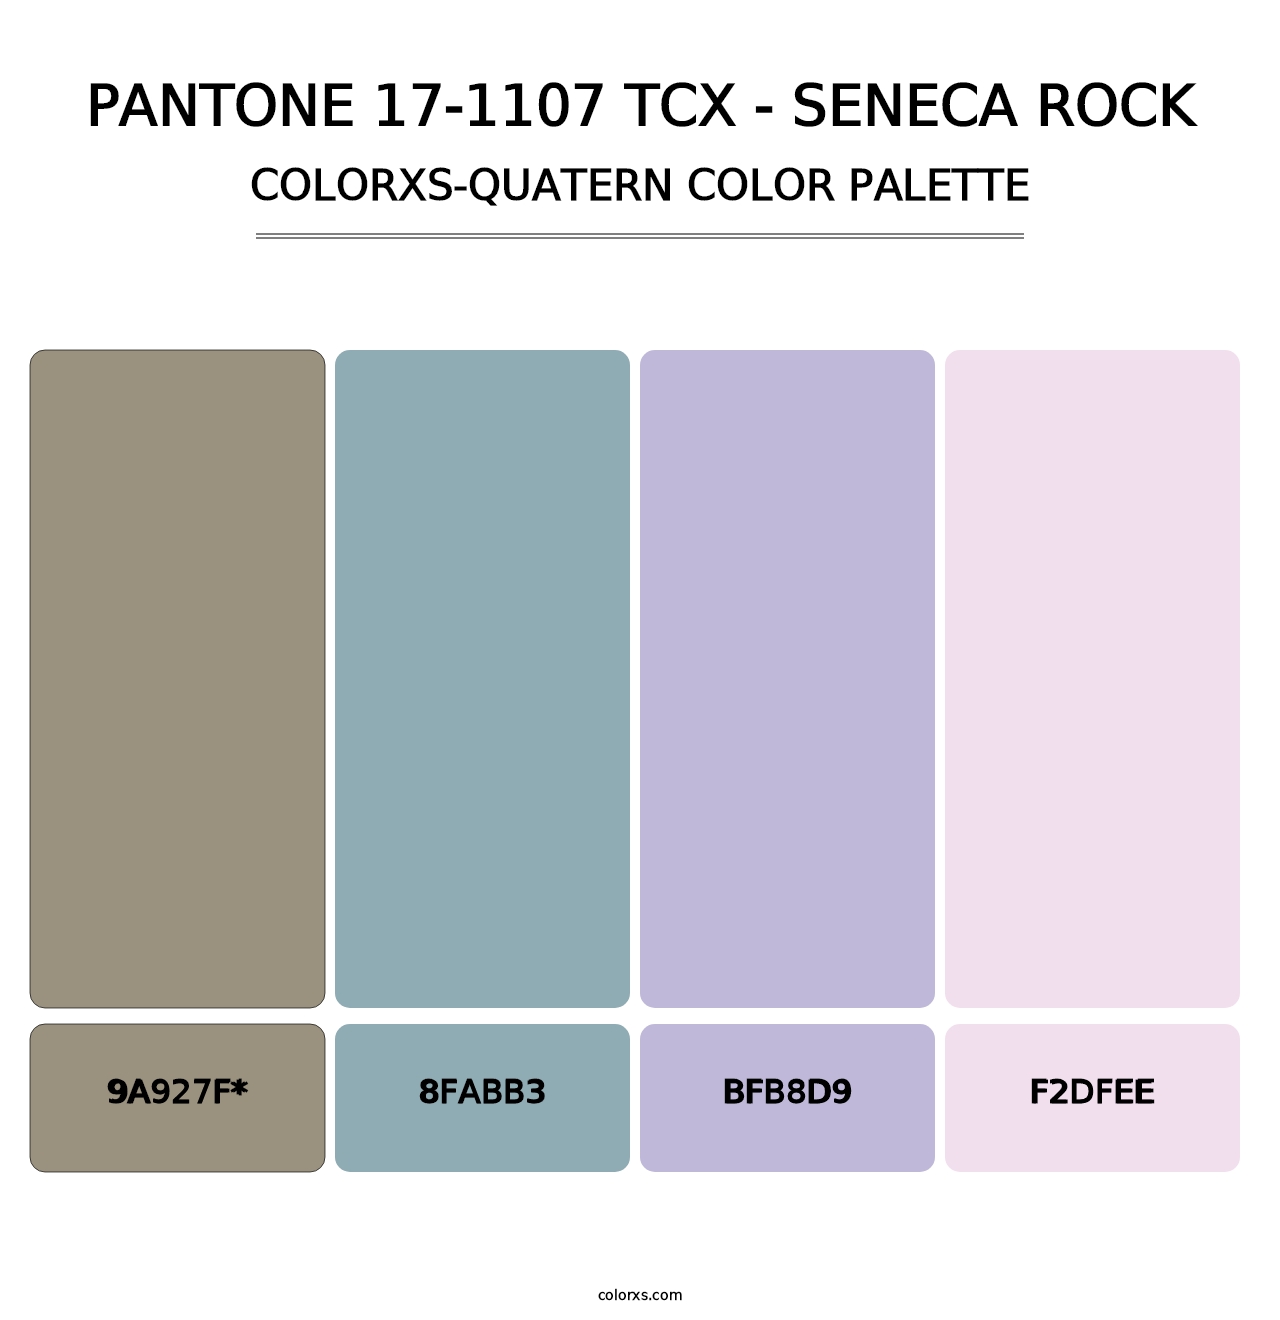 PANTONE 17-1107 TCX - Seneca Rock - Colorxs Quatern Palette